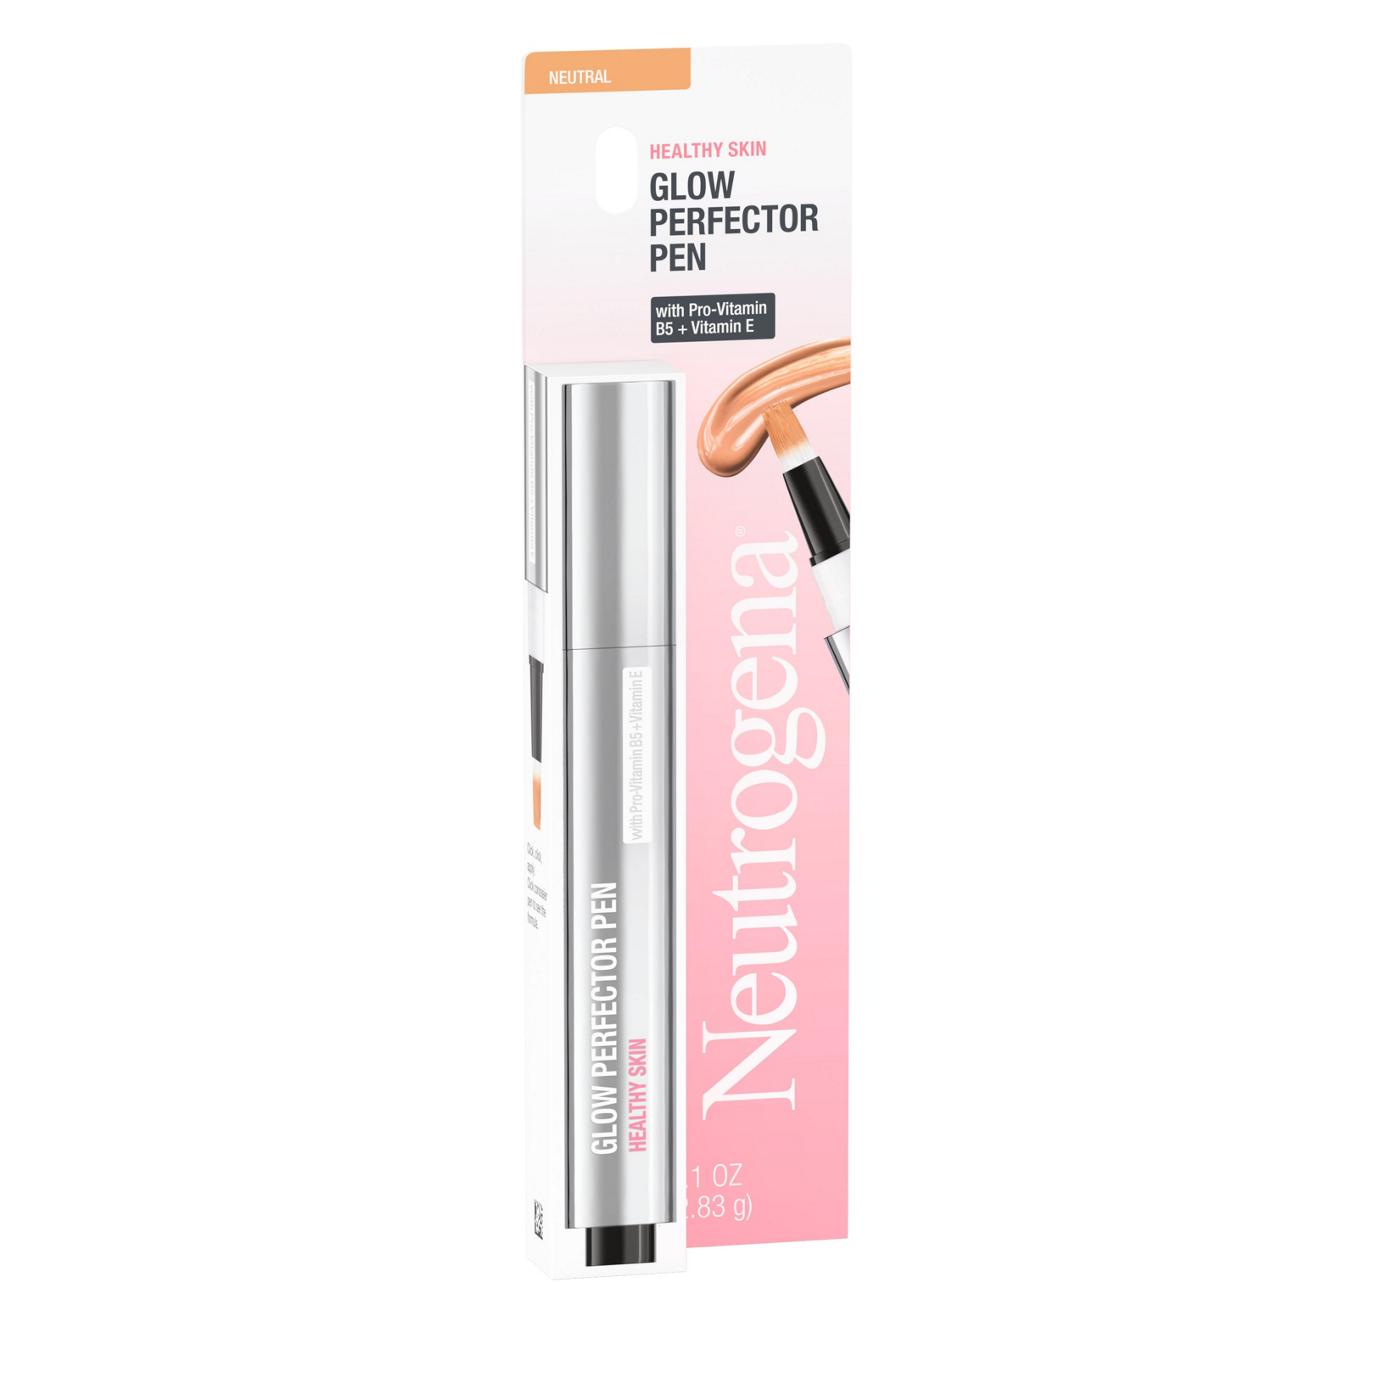 Neutrogena Healthy Skin Glow Perfector Pen - Neutral; image 1 of 2